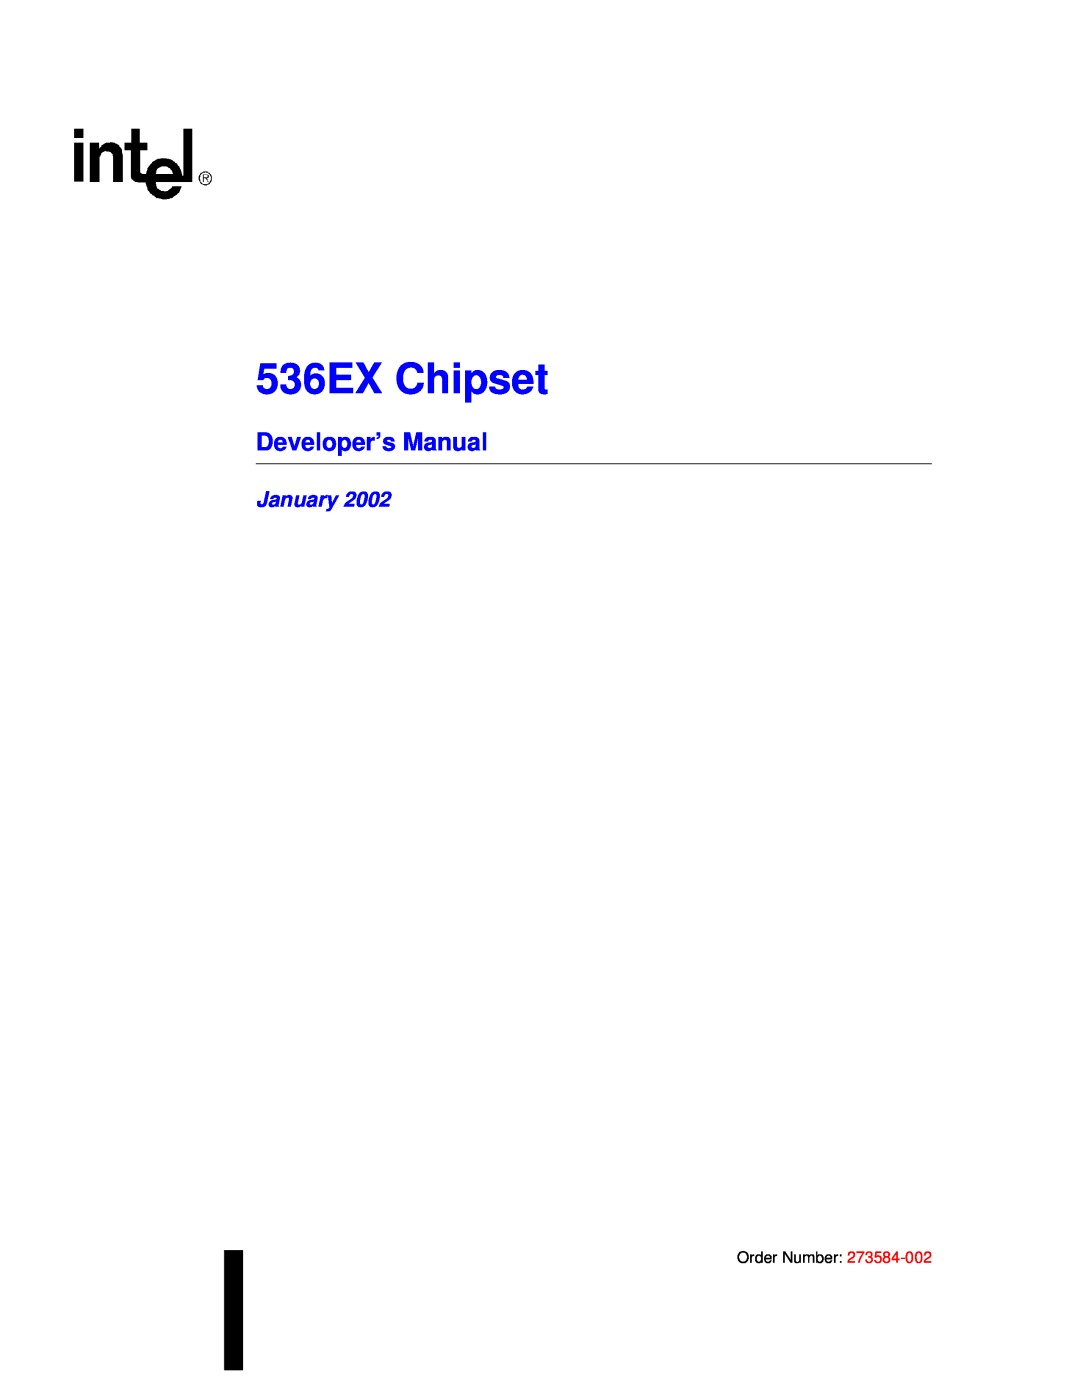 Intel manual 536EX Chipset, Developer’s Manual, January 